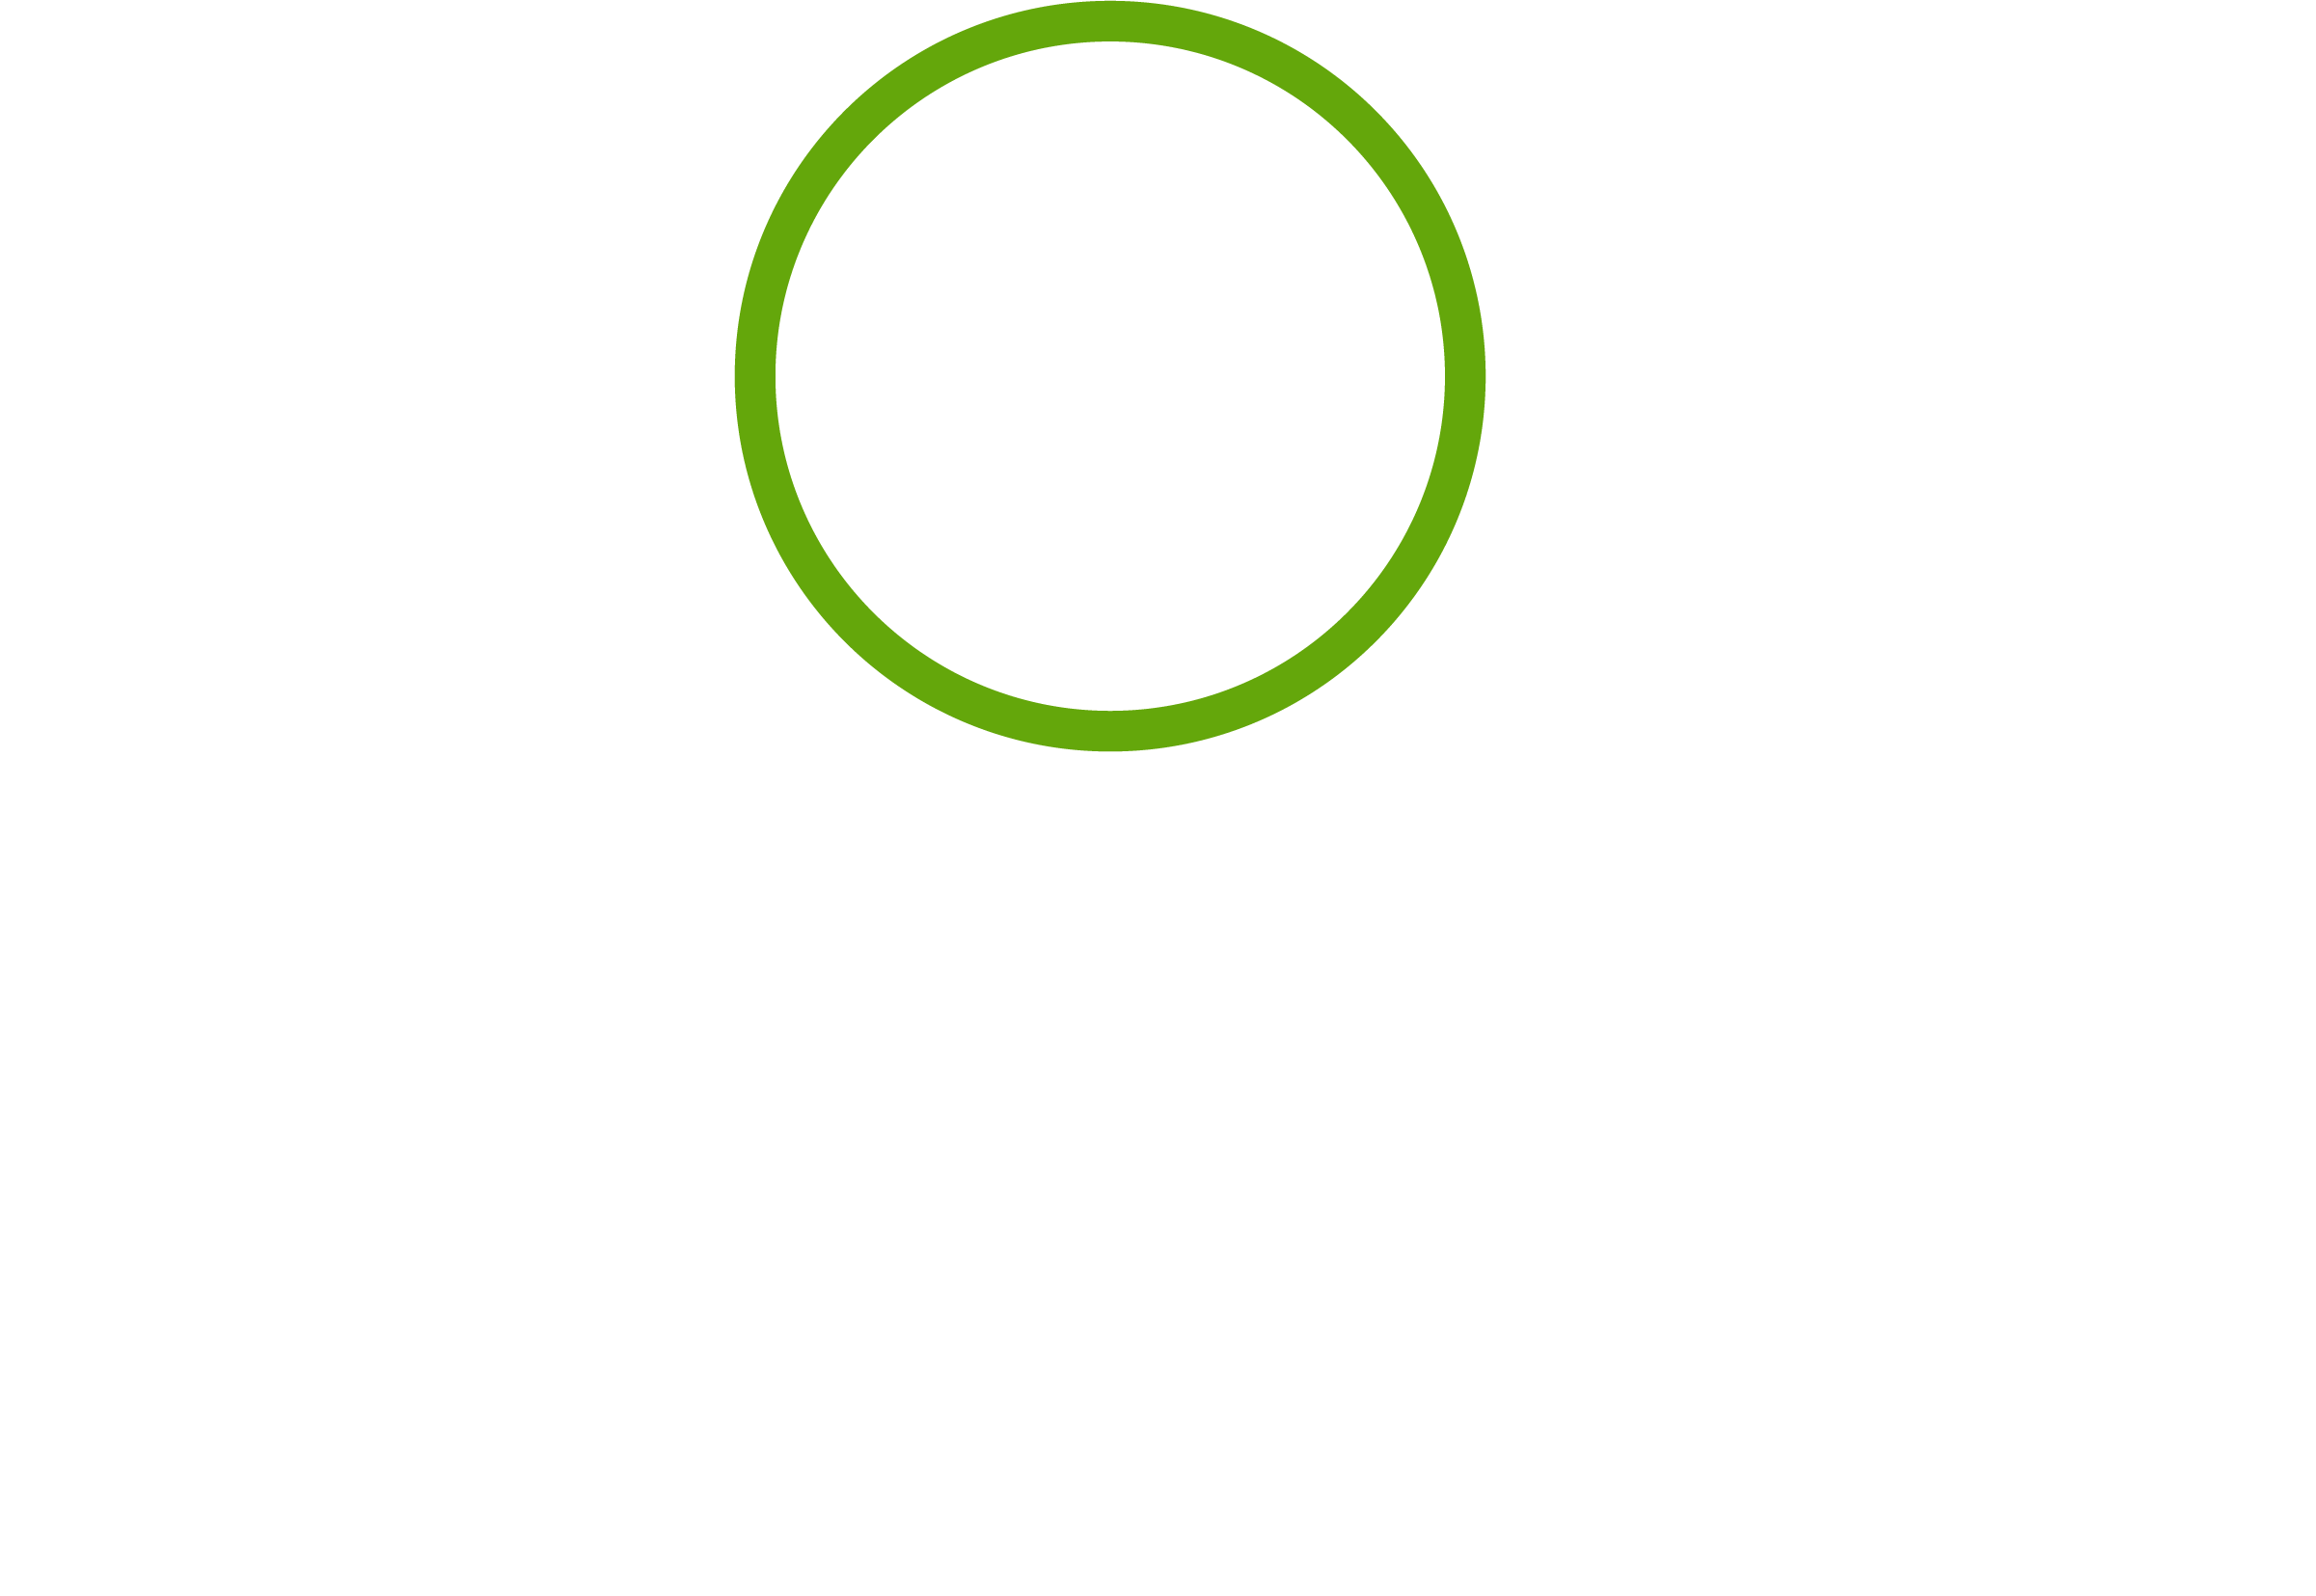 Centurion Service Group: A TRIMEDX Company logo